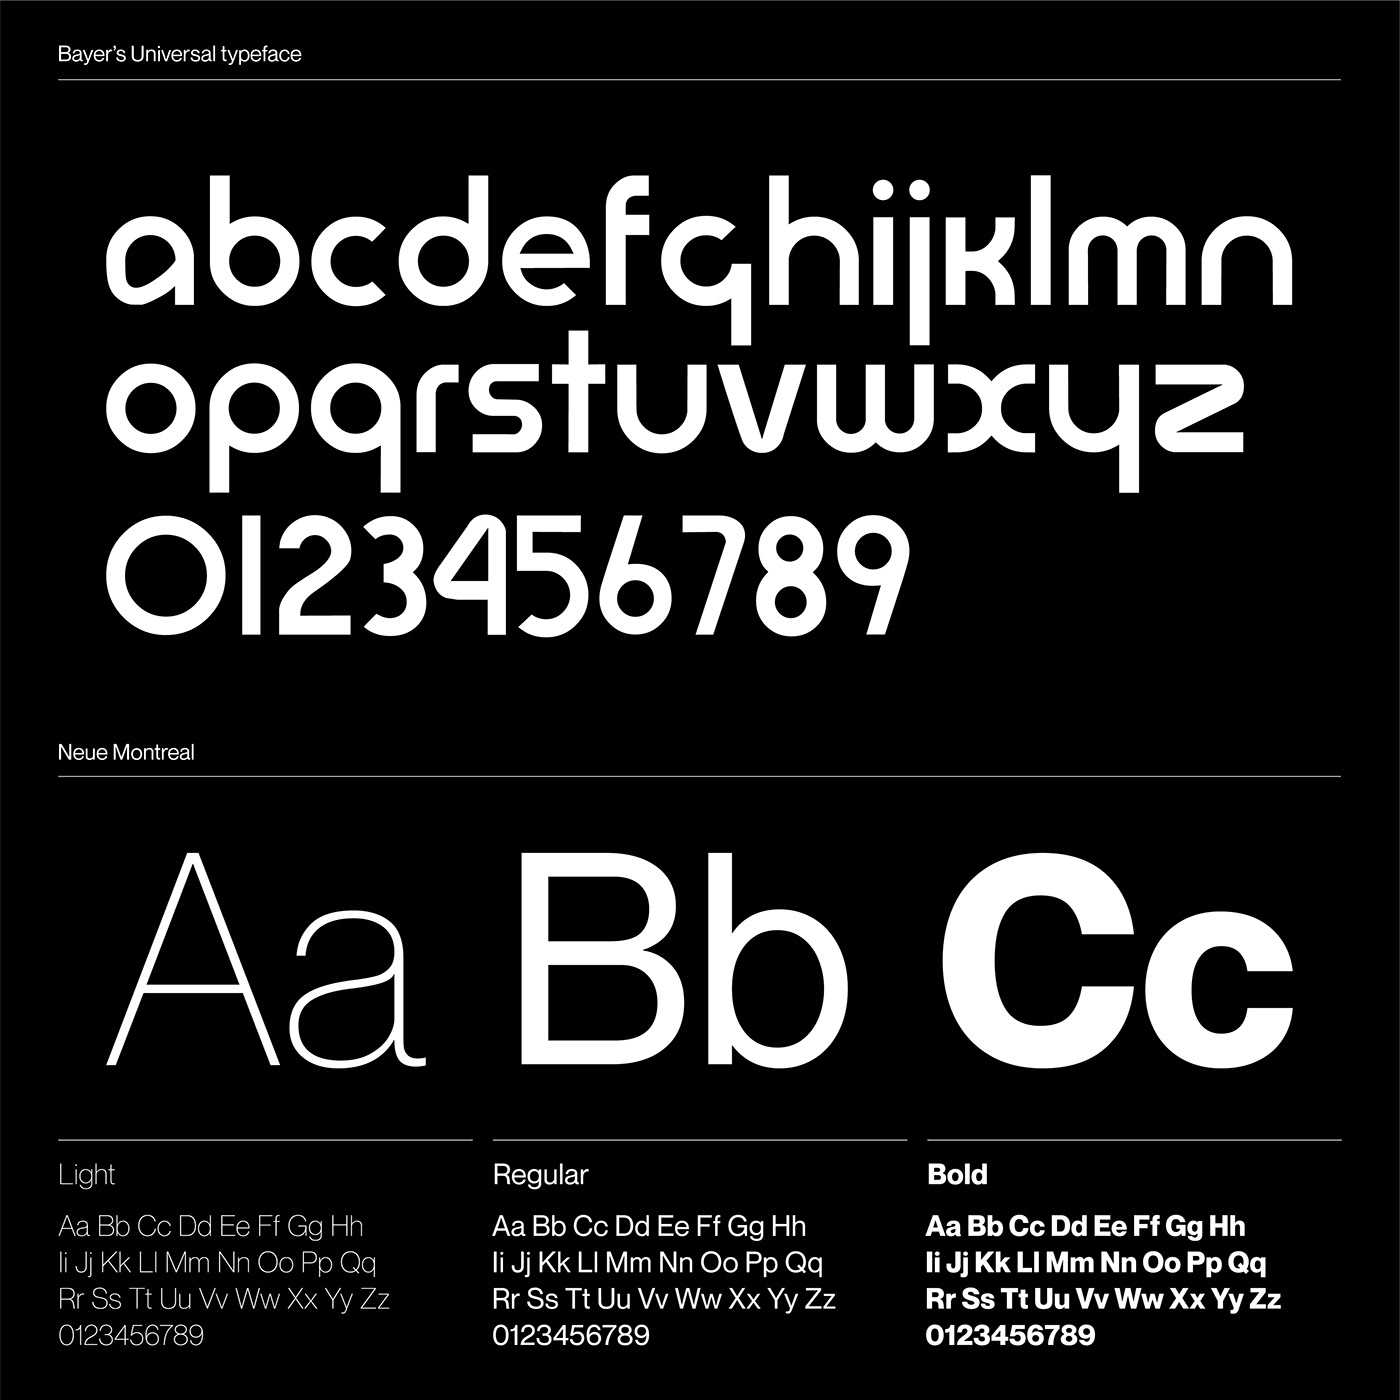 branding  print Web Design  architecture logo visual identity Collateral magazine motion graphics  bauhaus